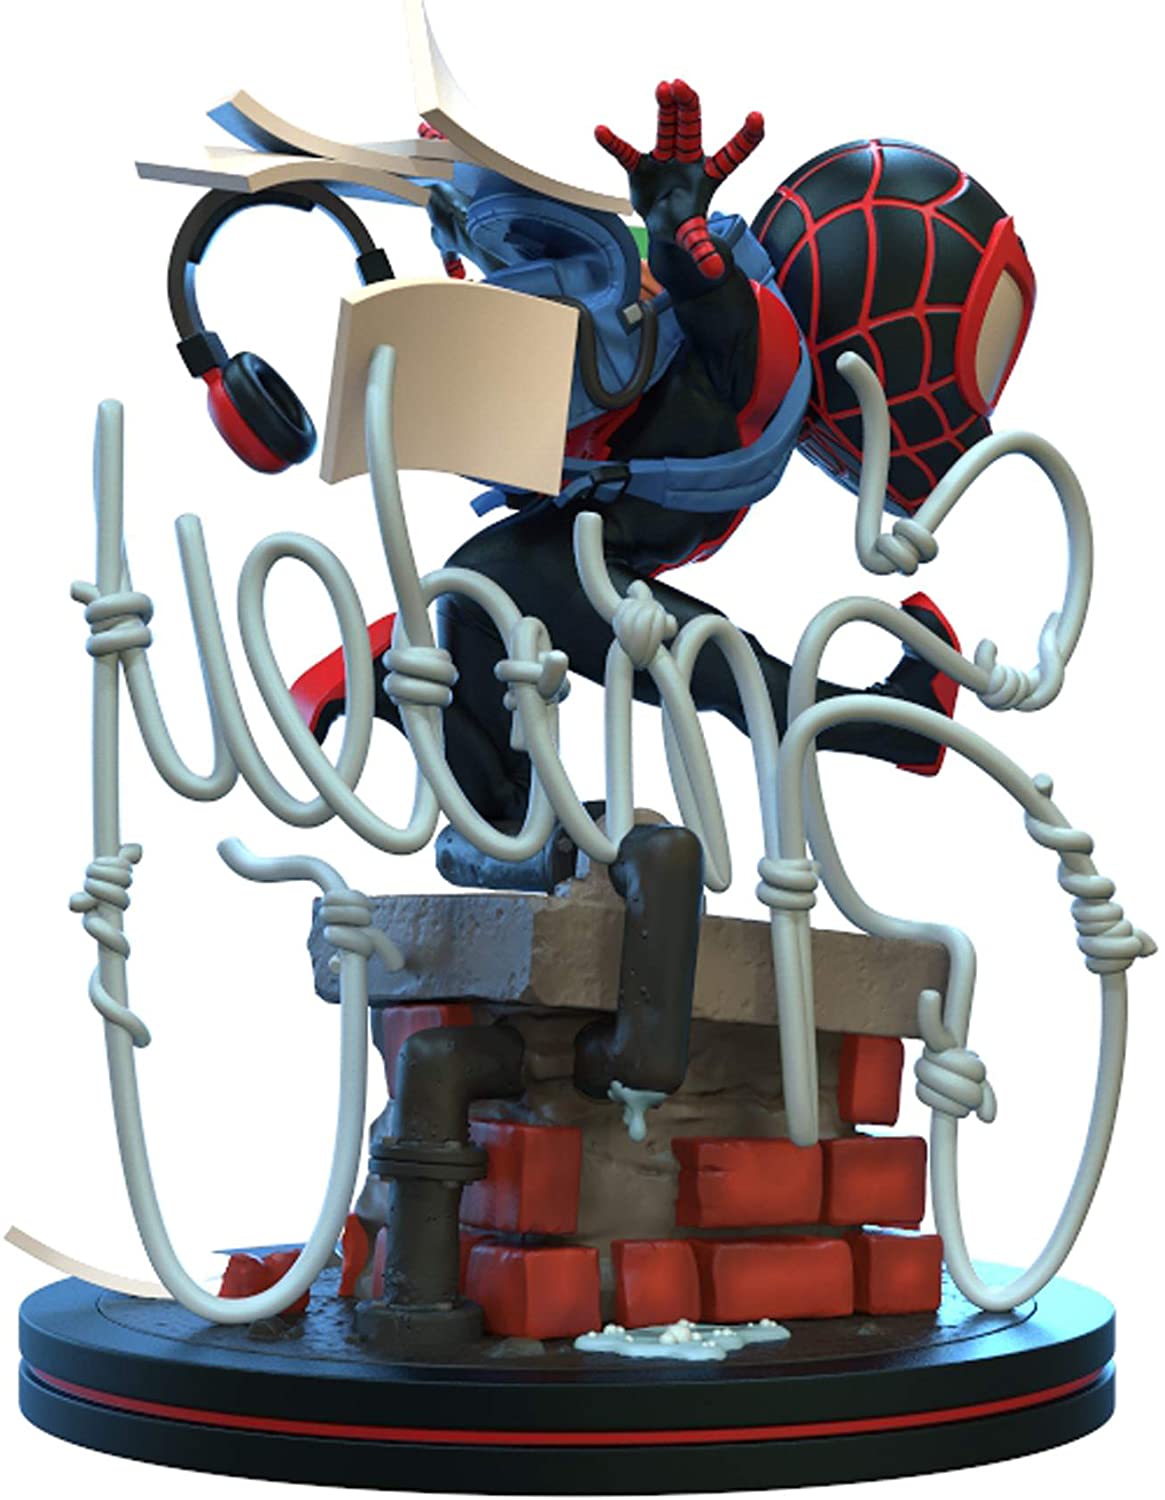 Miles Morales Spider-Man Q-Fig Elite Diorama by QMx